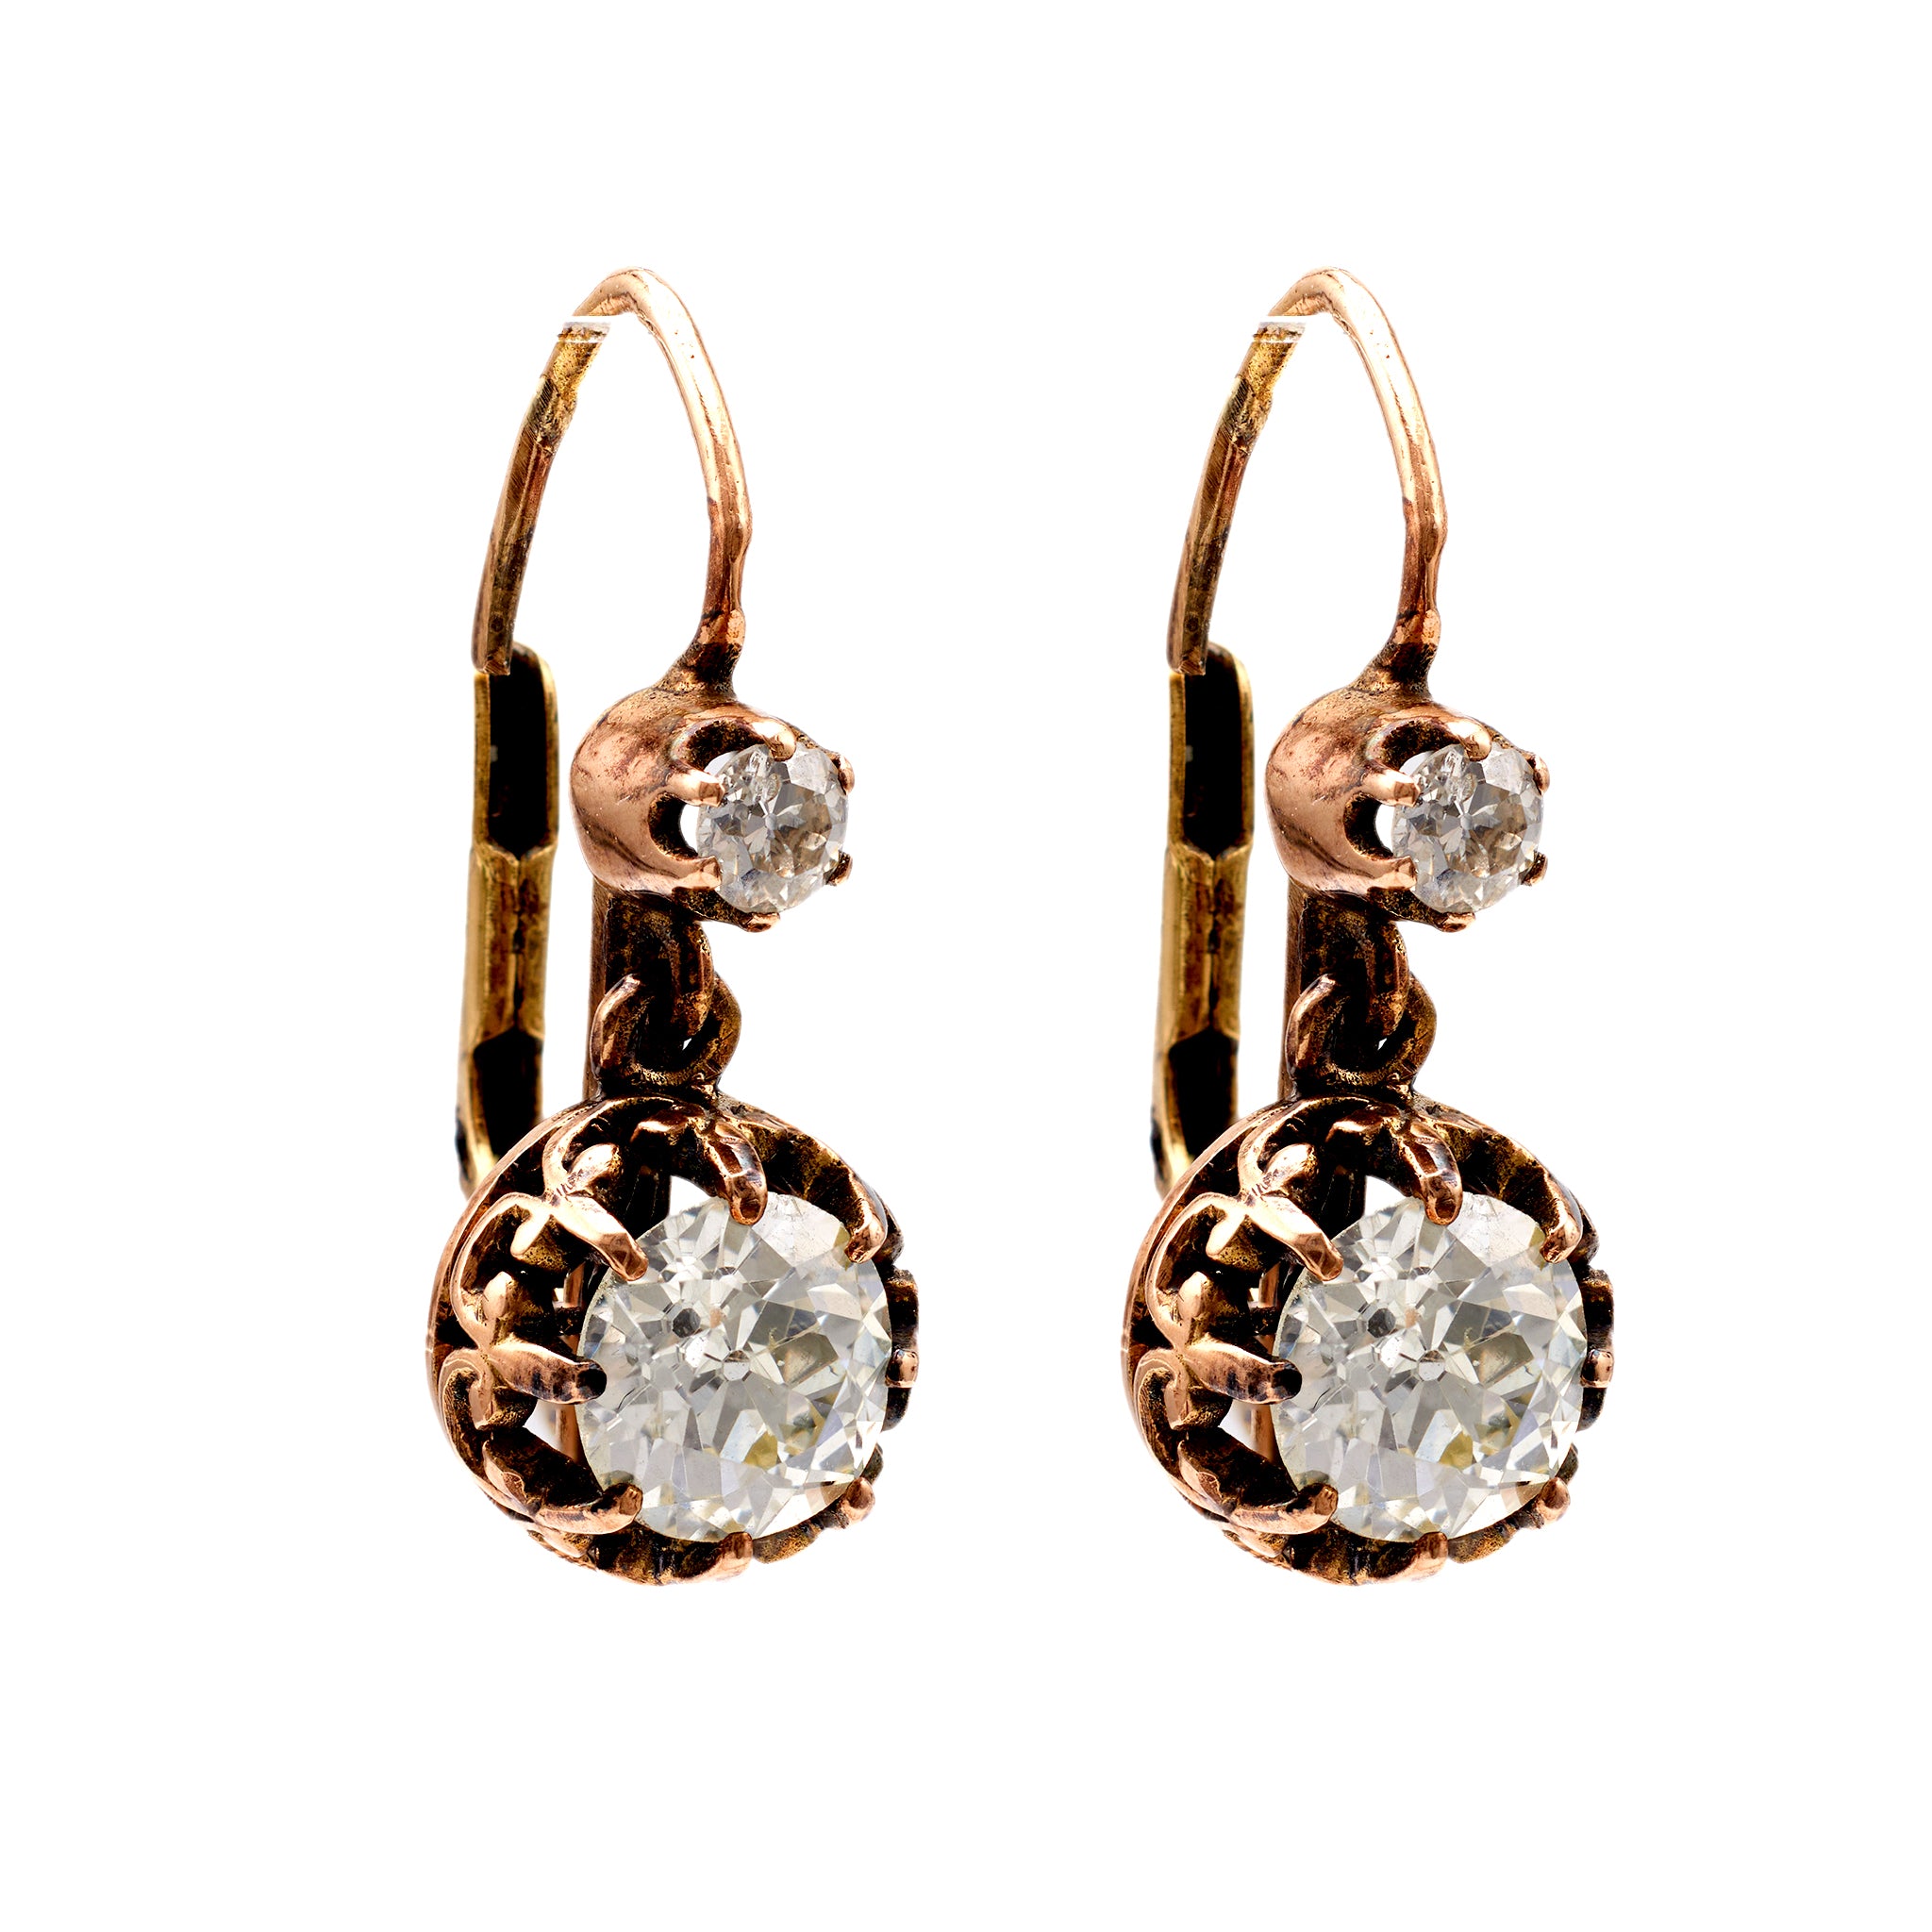 Antique Inspired 1.93 Carat Diamond 18k Gold Drop Earrings Earrings Jack Weir & Sons   